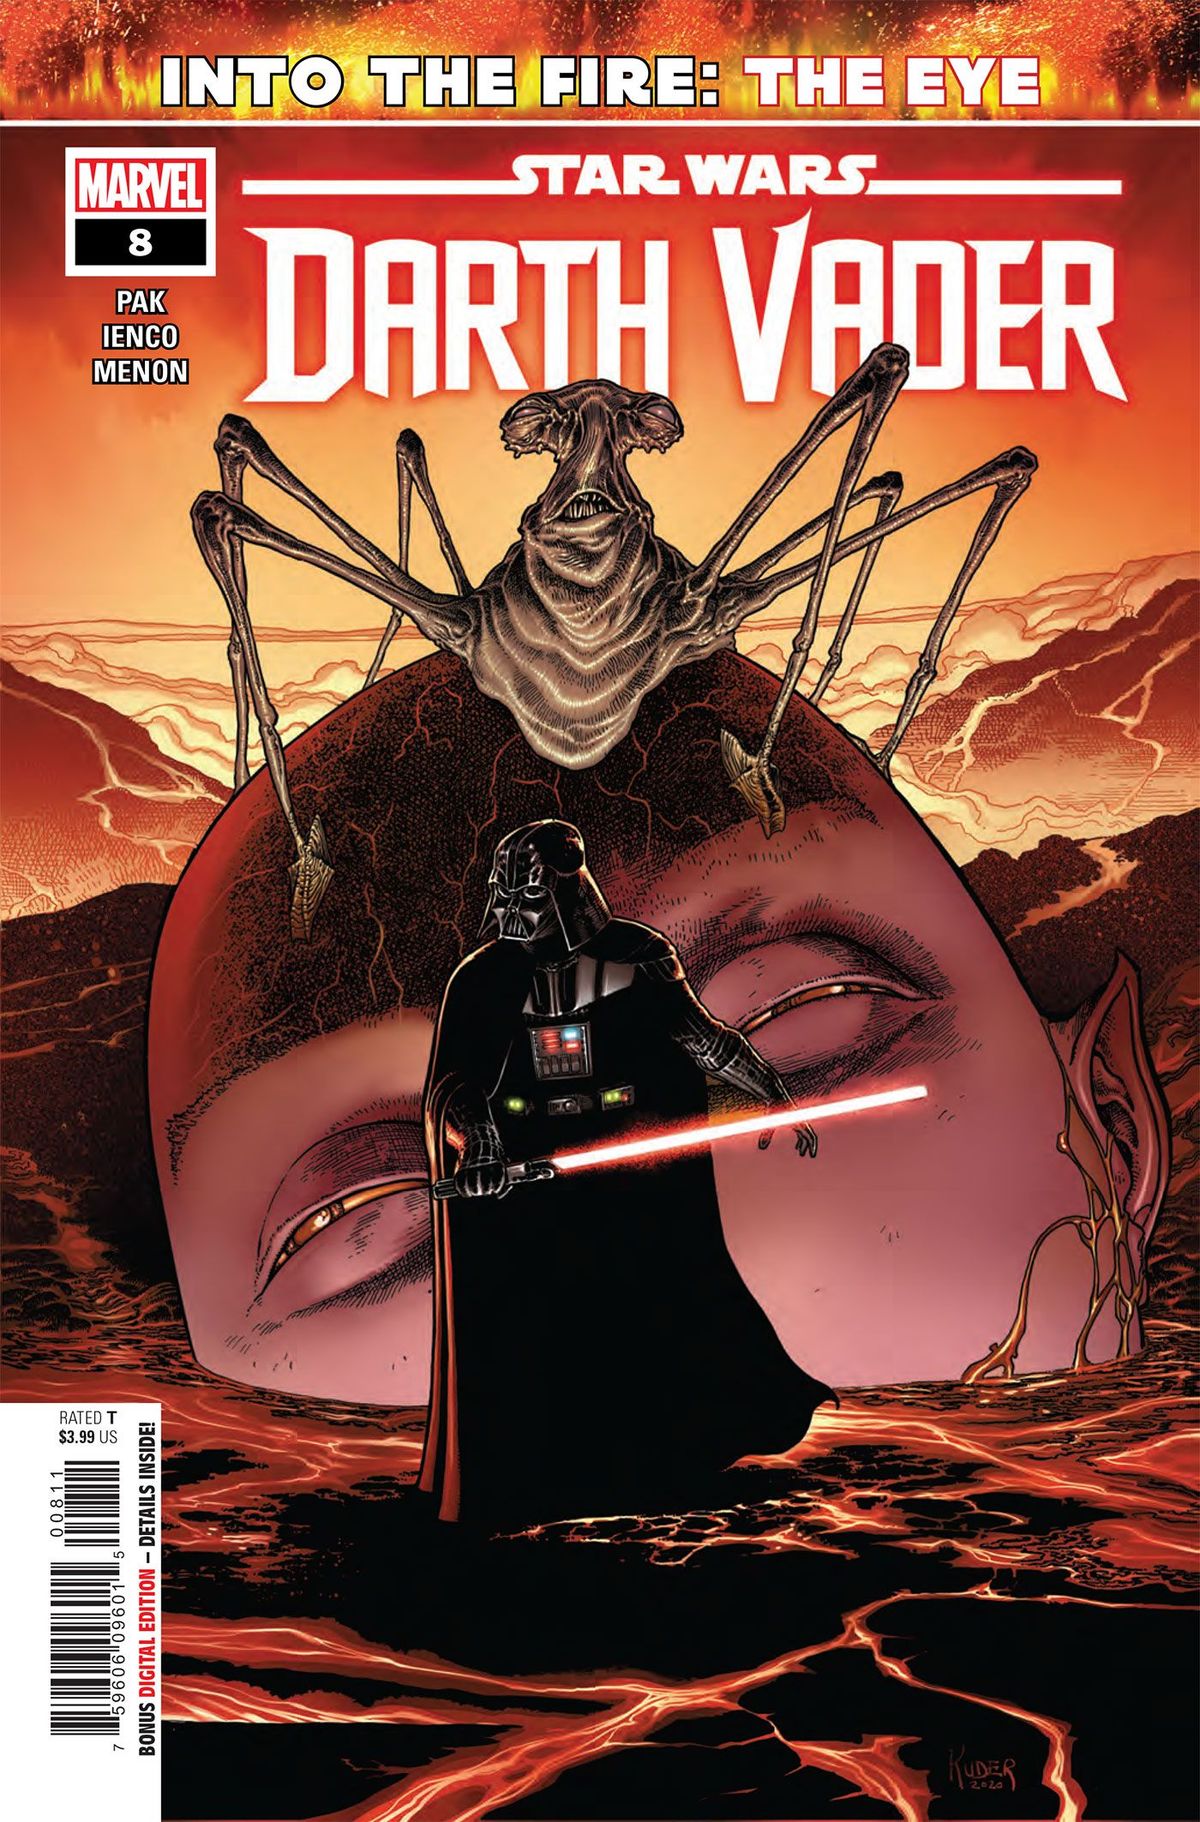 VOORBEELD: Star Wars: Darth Vader #8